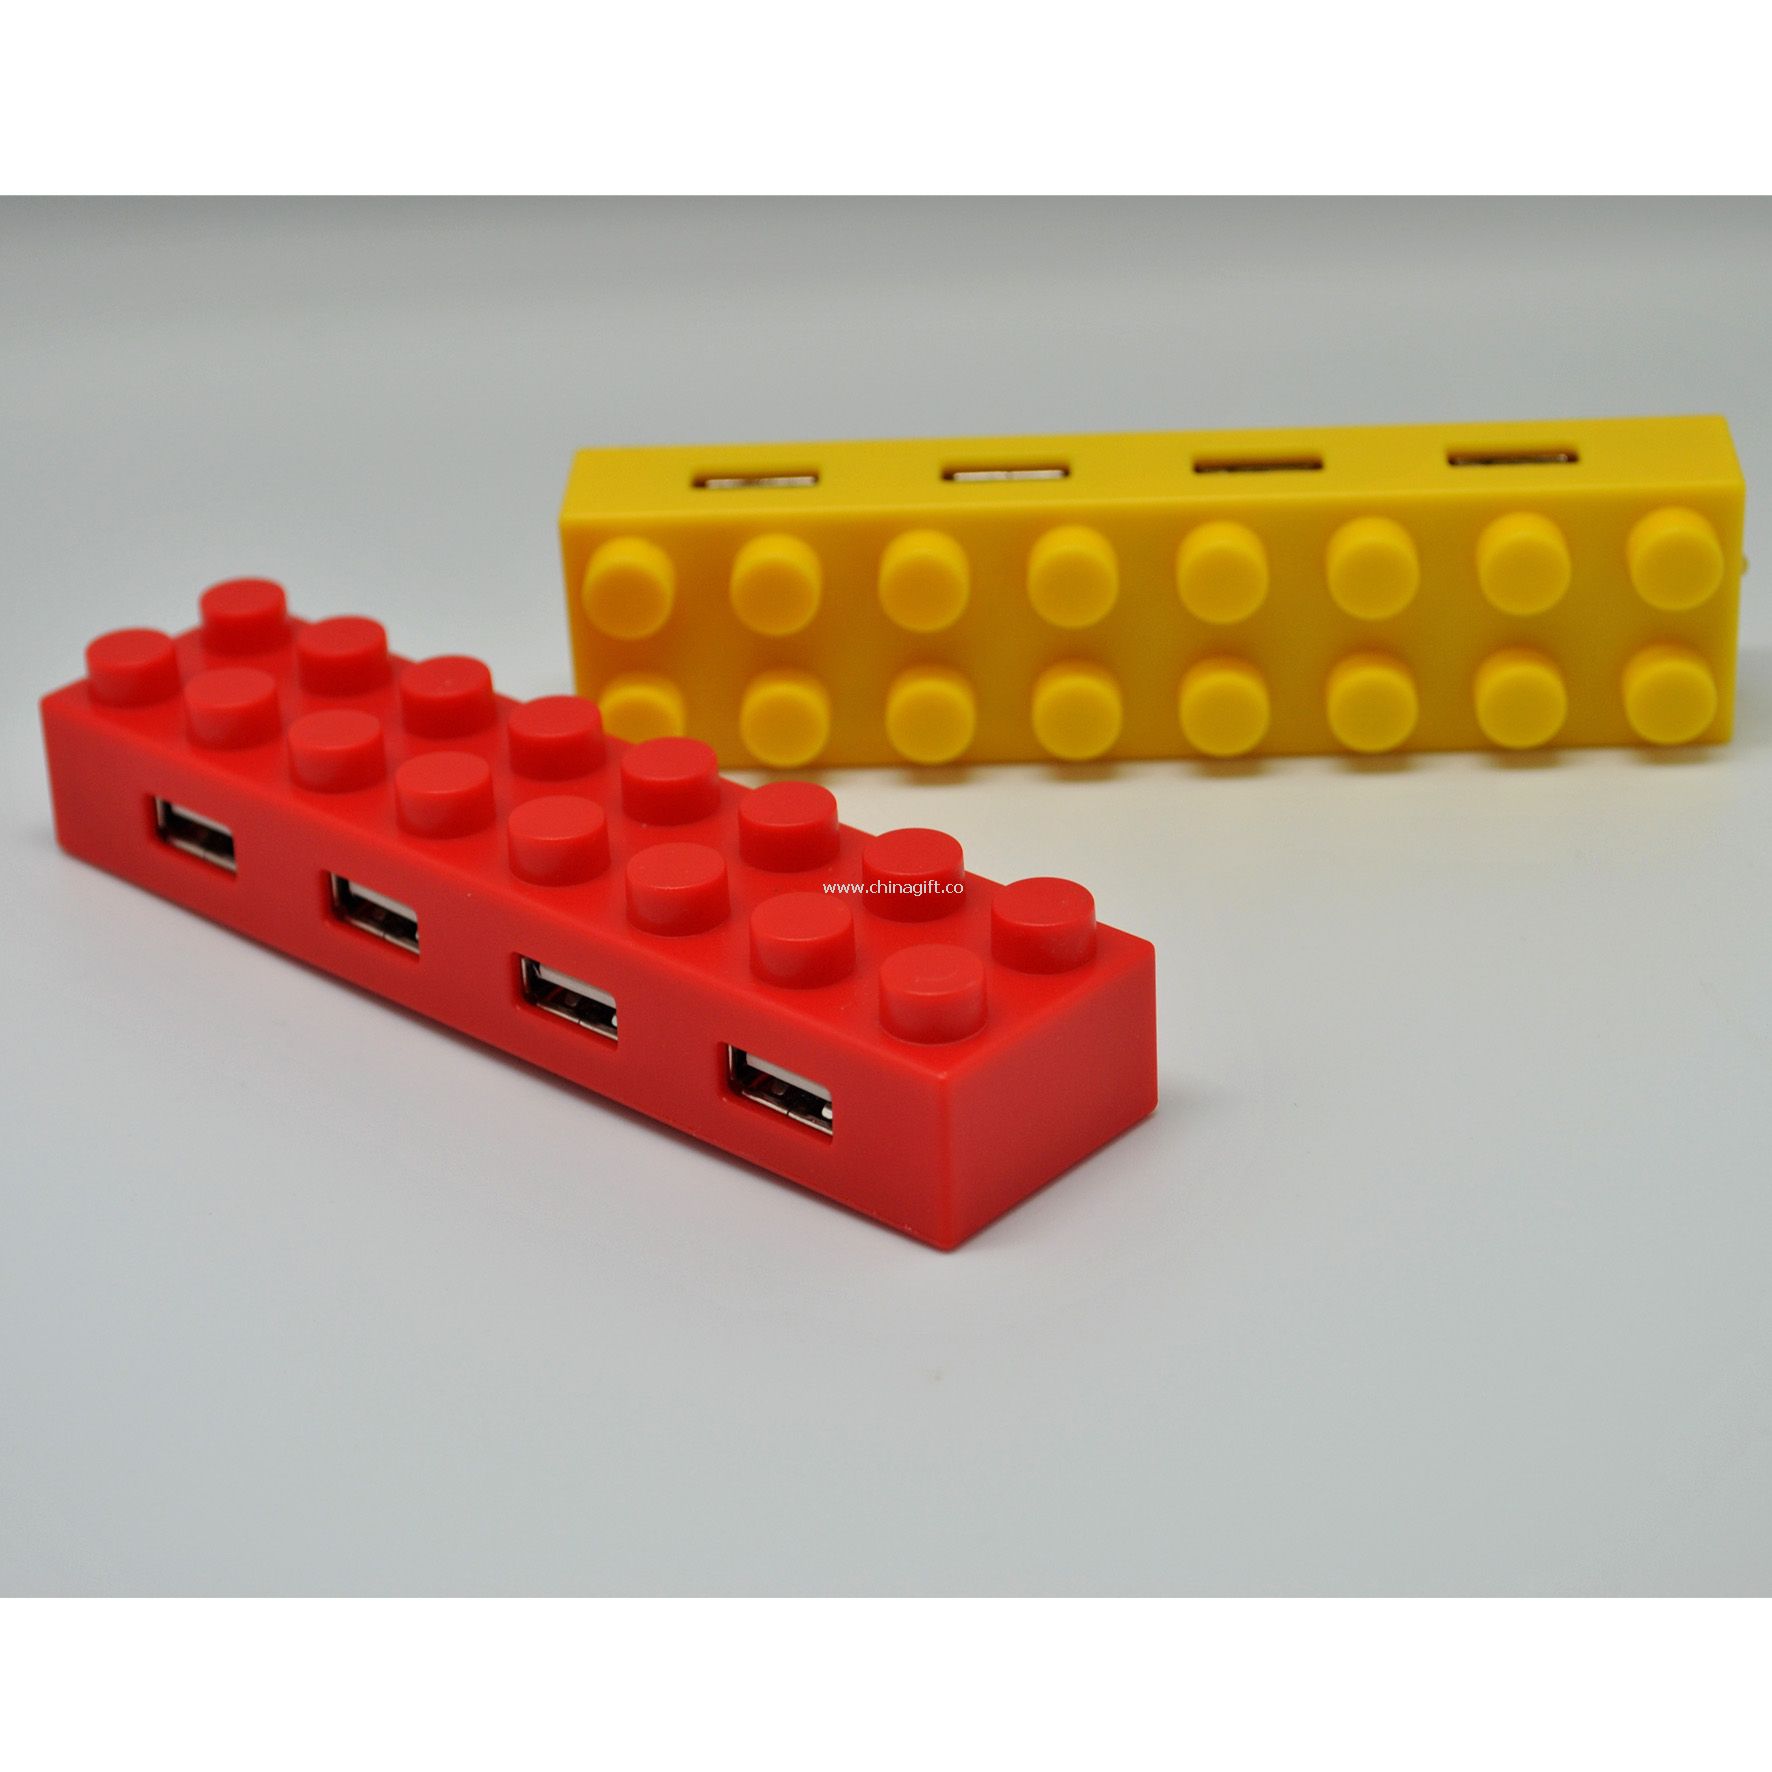 USB HUB in blocks shape